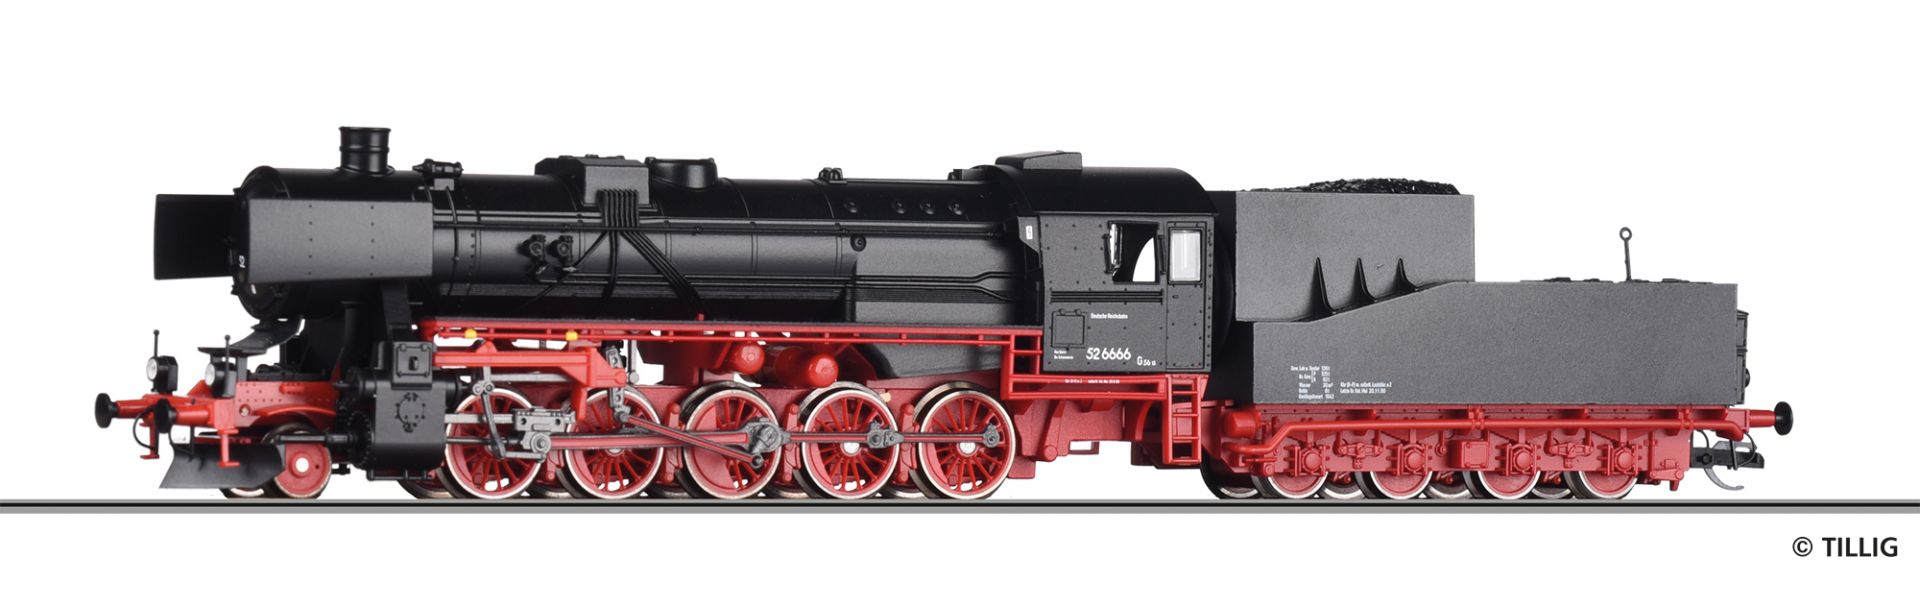 502393 | Dampflokomotive Museum